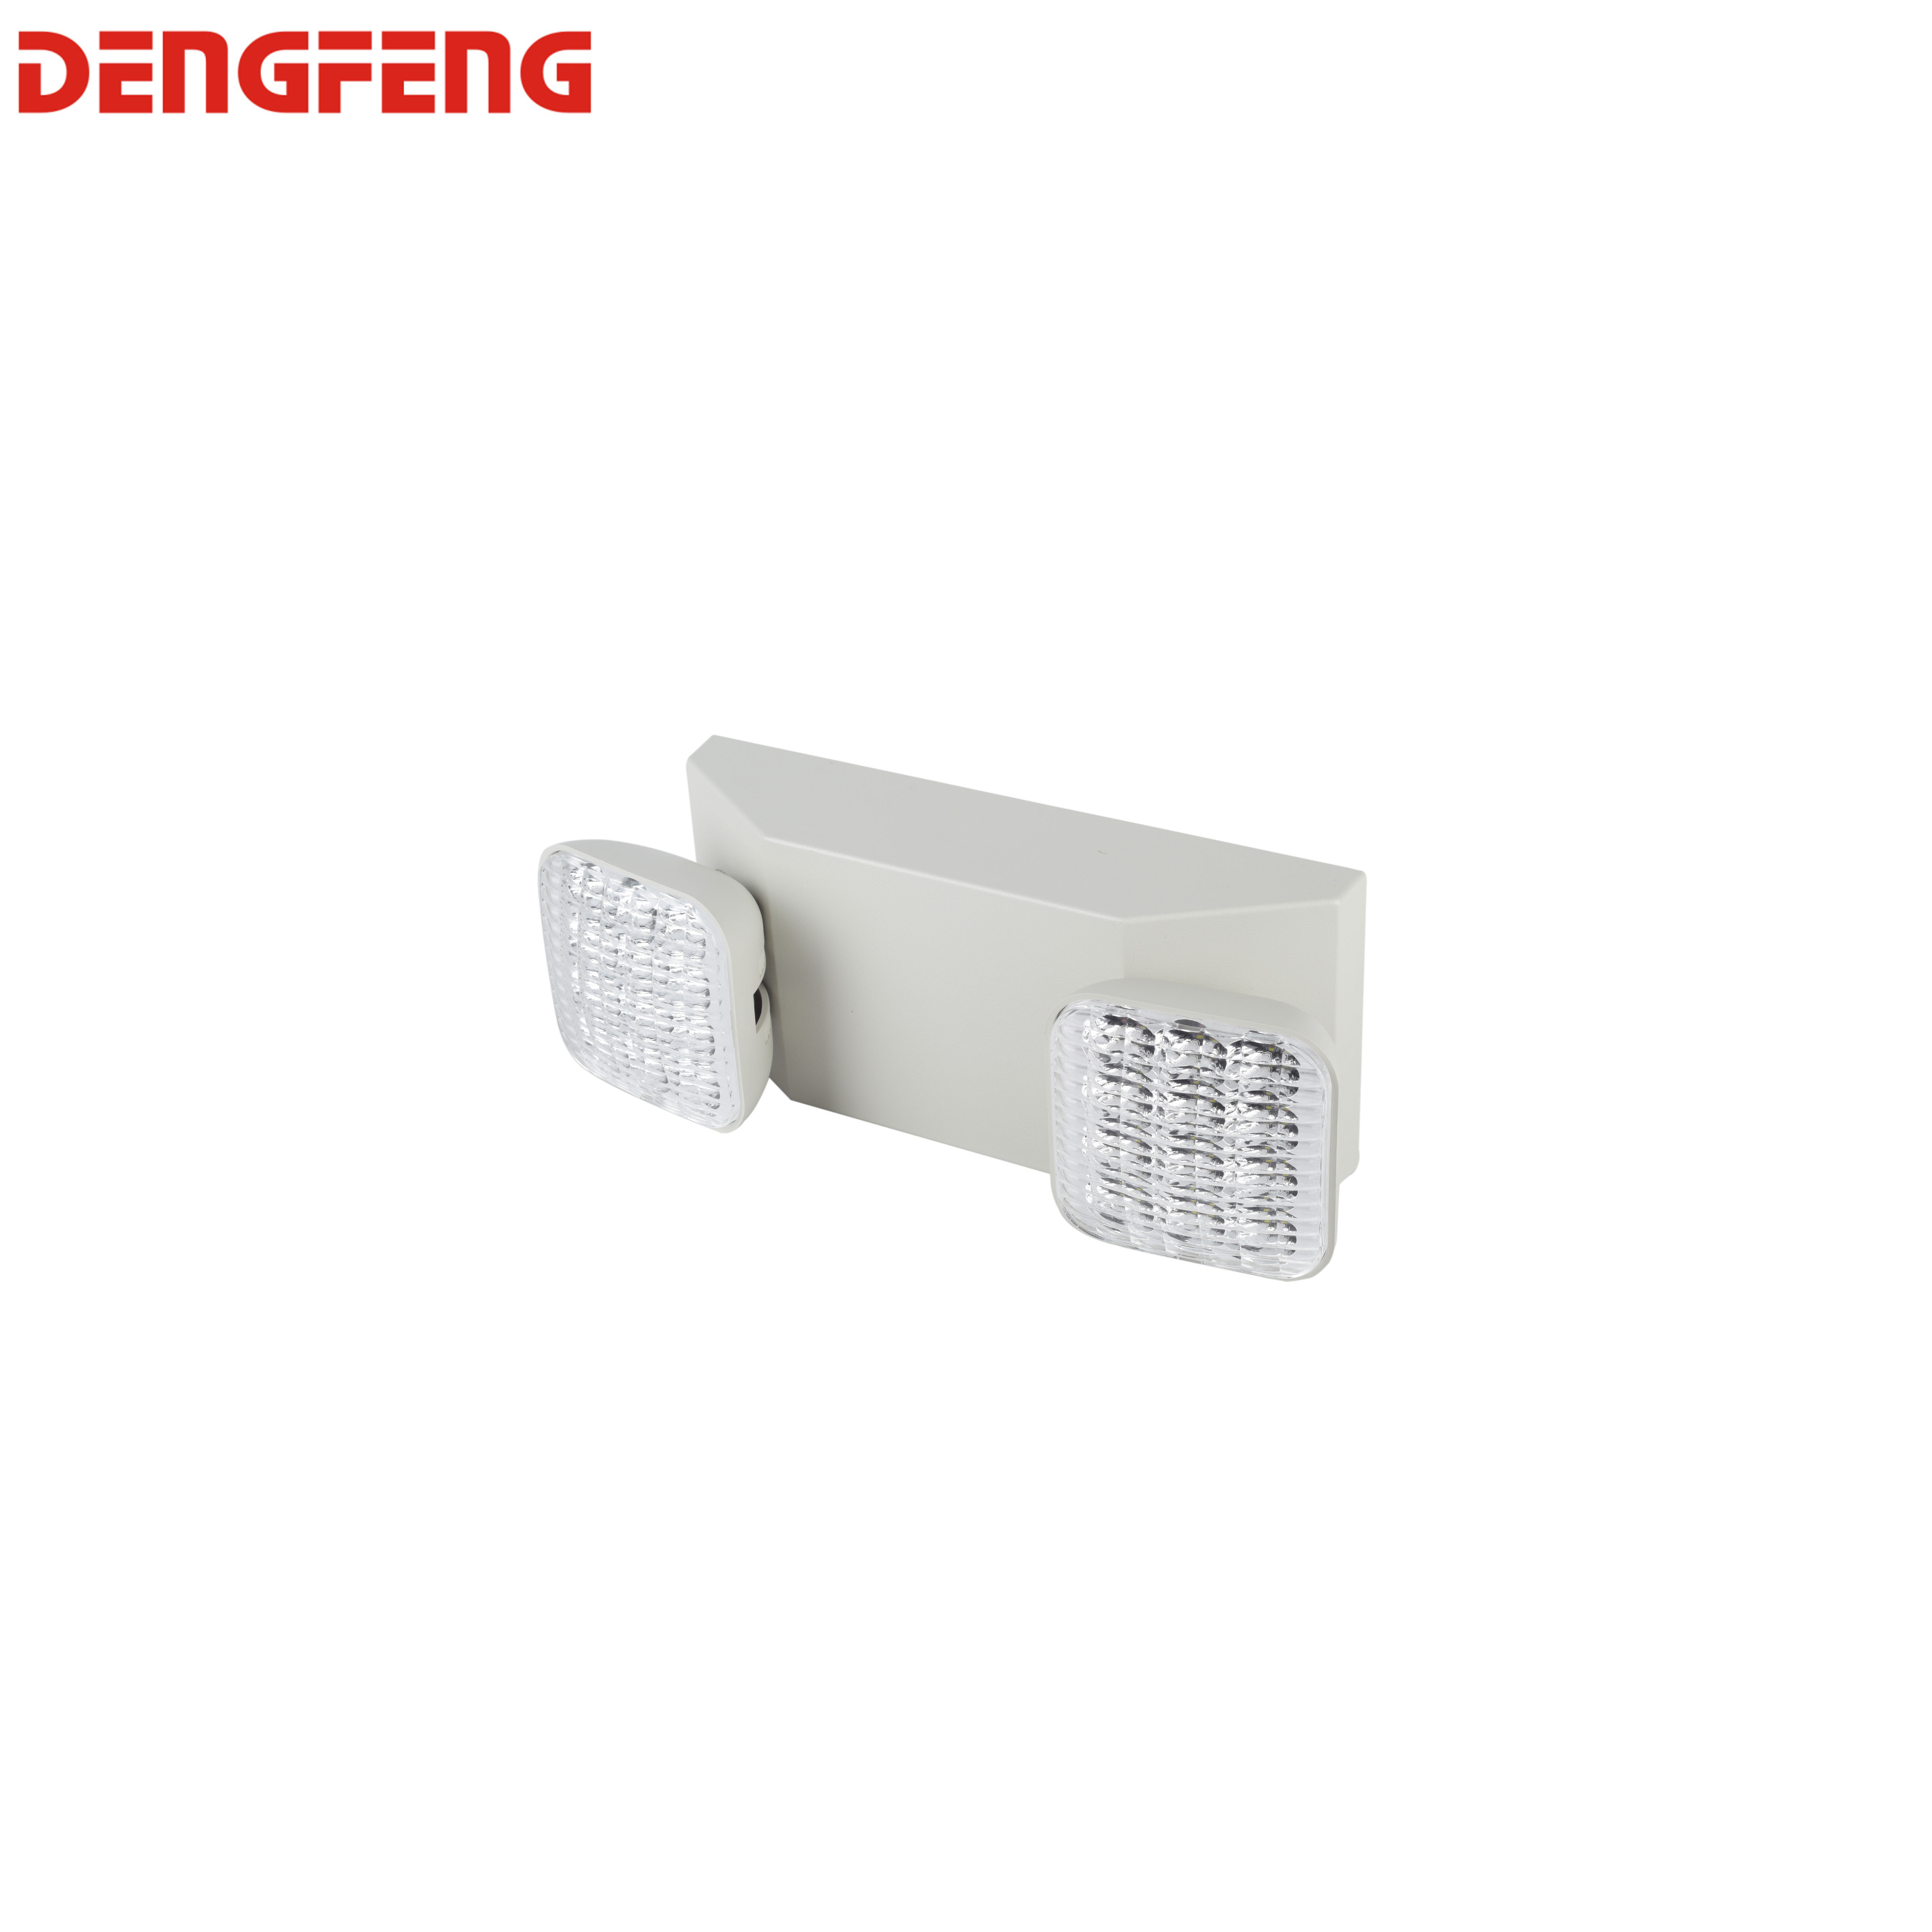 LED fire safetyexitsignsemergencywarninglight